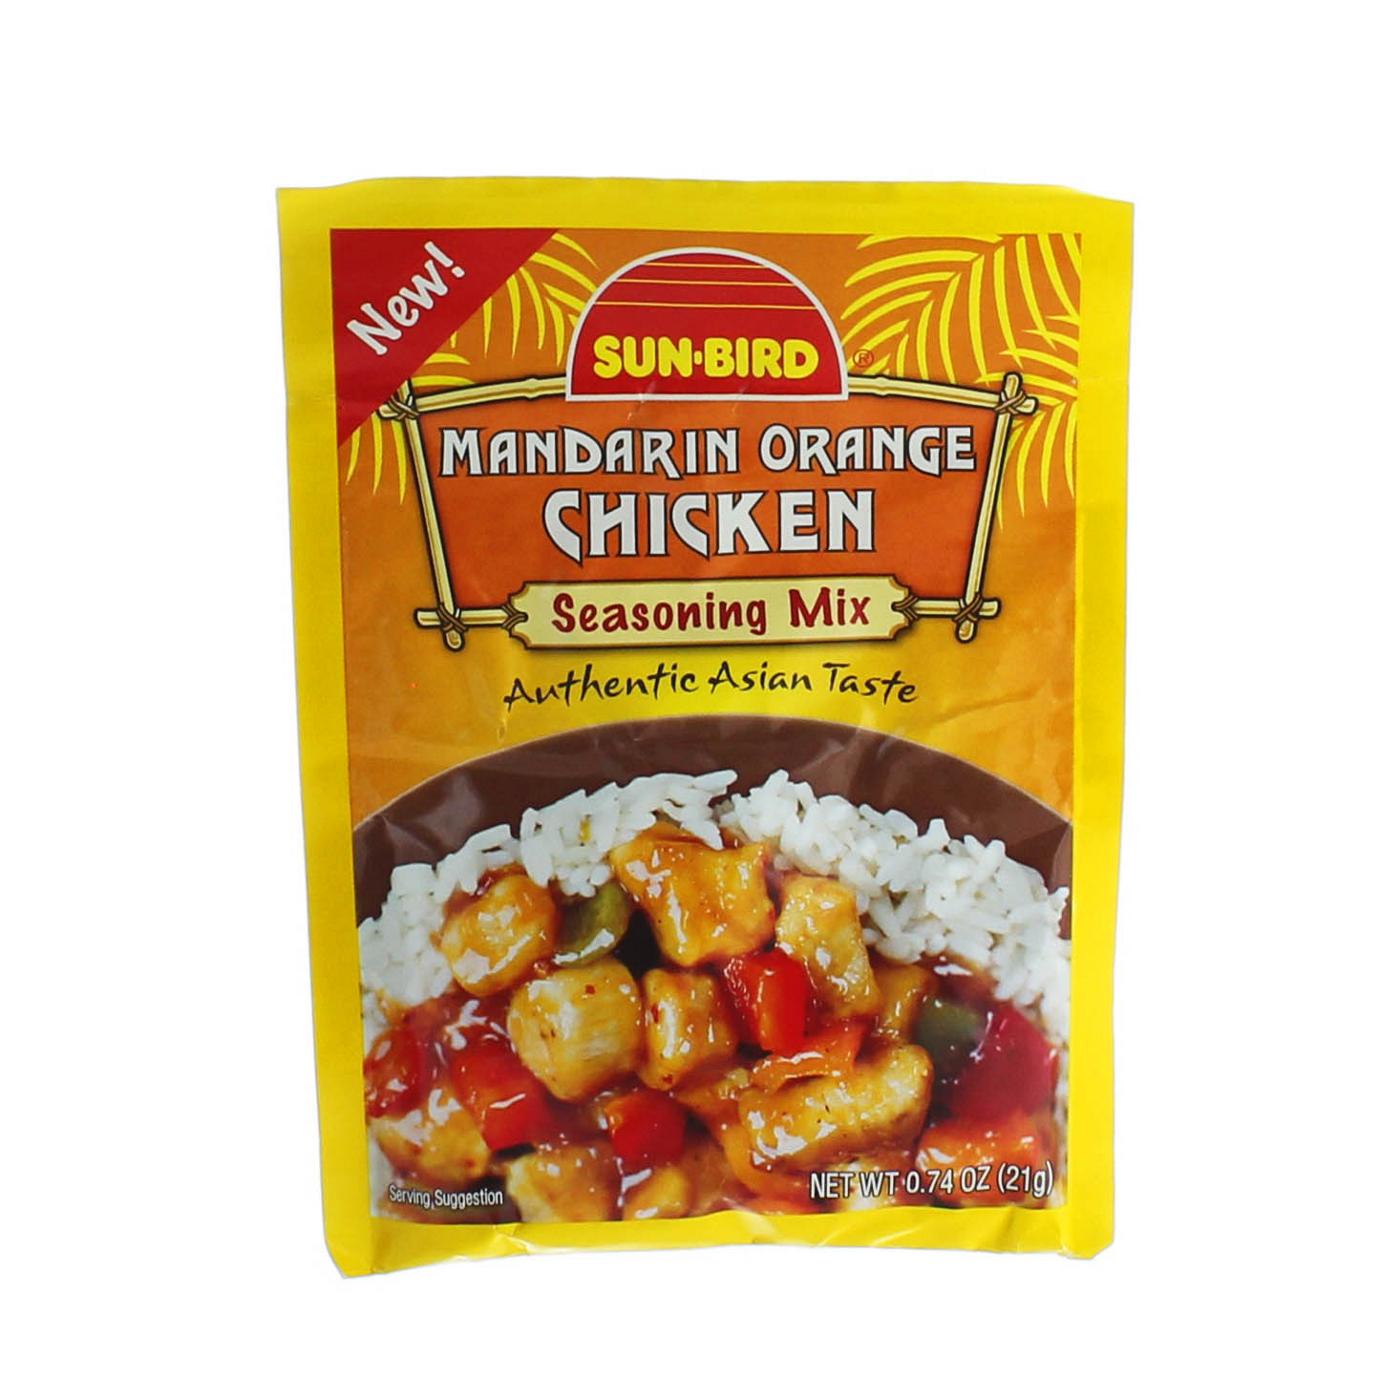 Sun-Bird Mandarin Orange Chicken Seasoning Mix; image 1 of 2